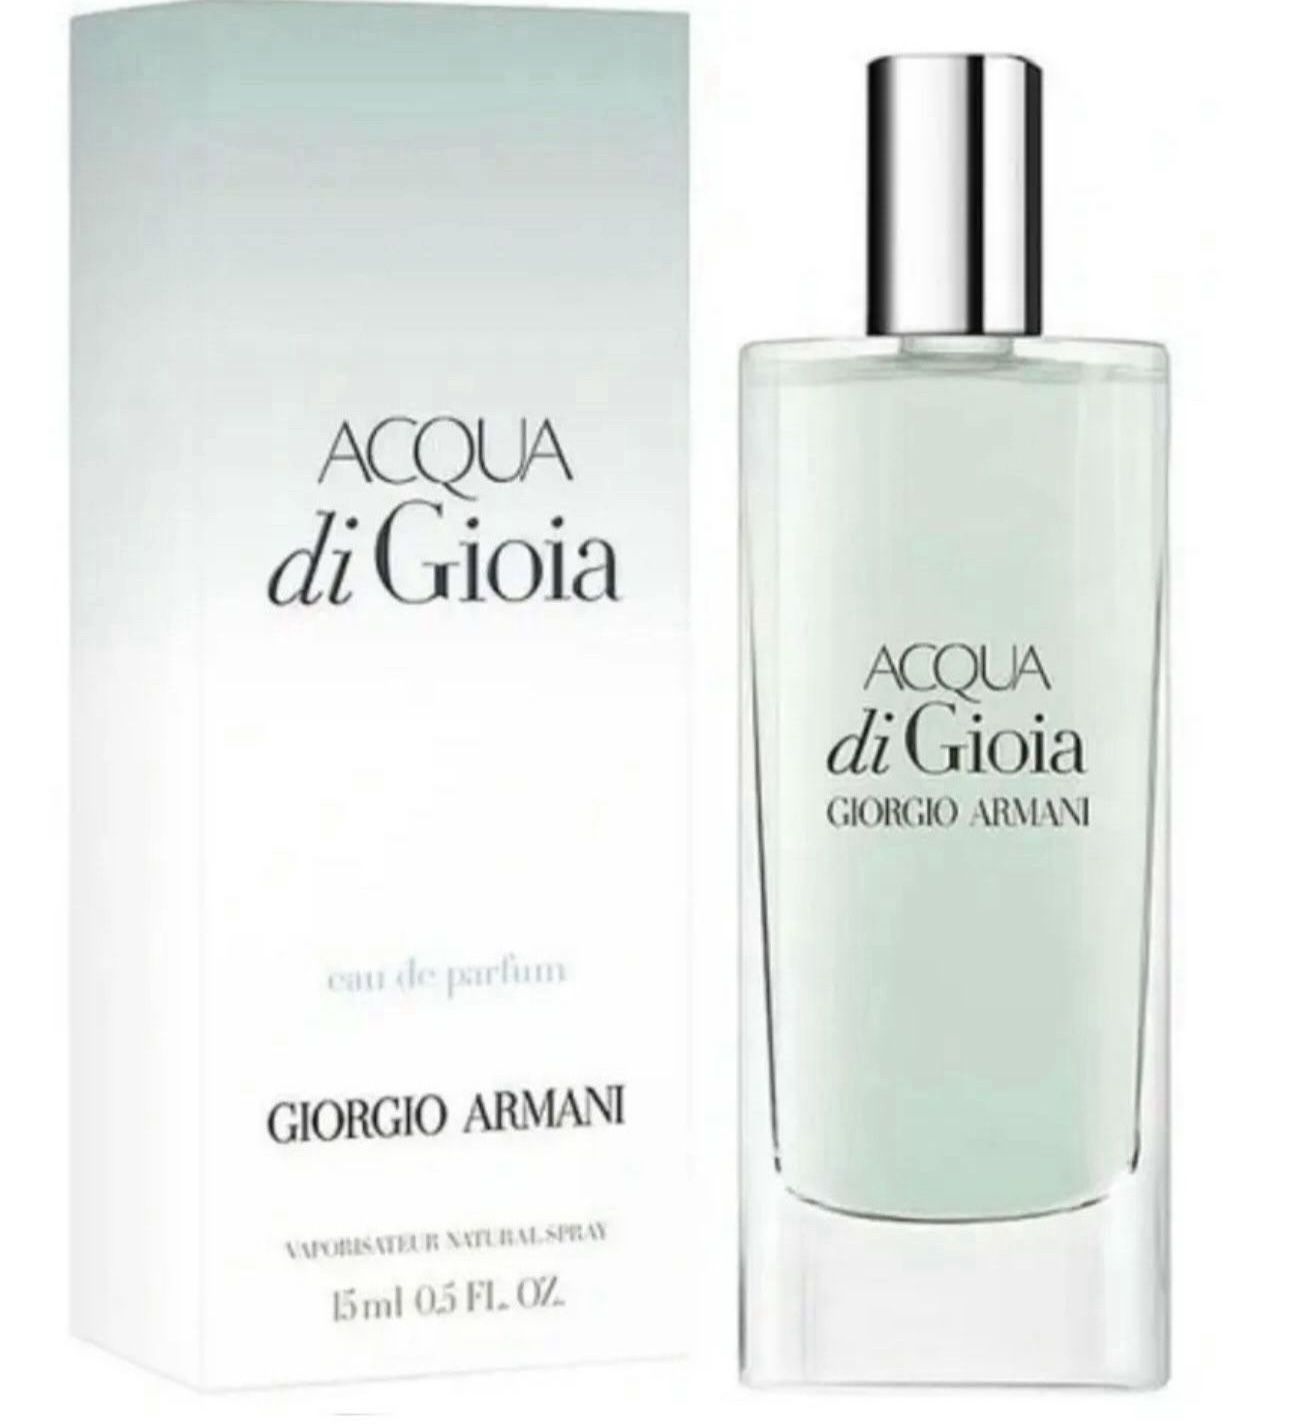 New Giorgio Armani My Way travel spray 15ml